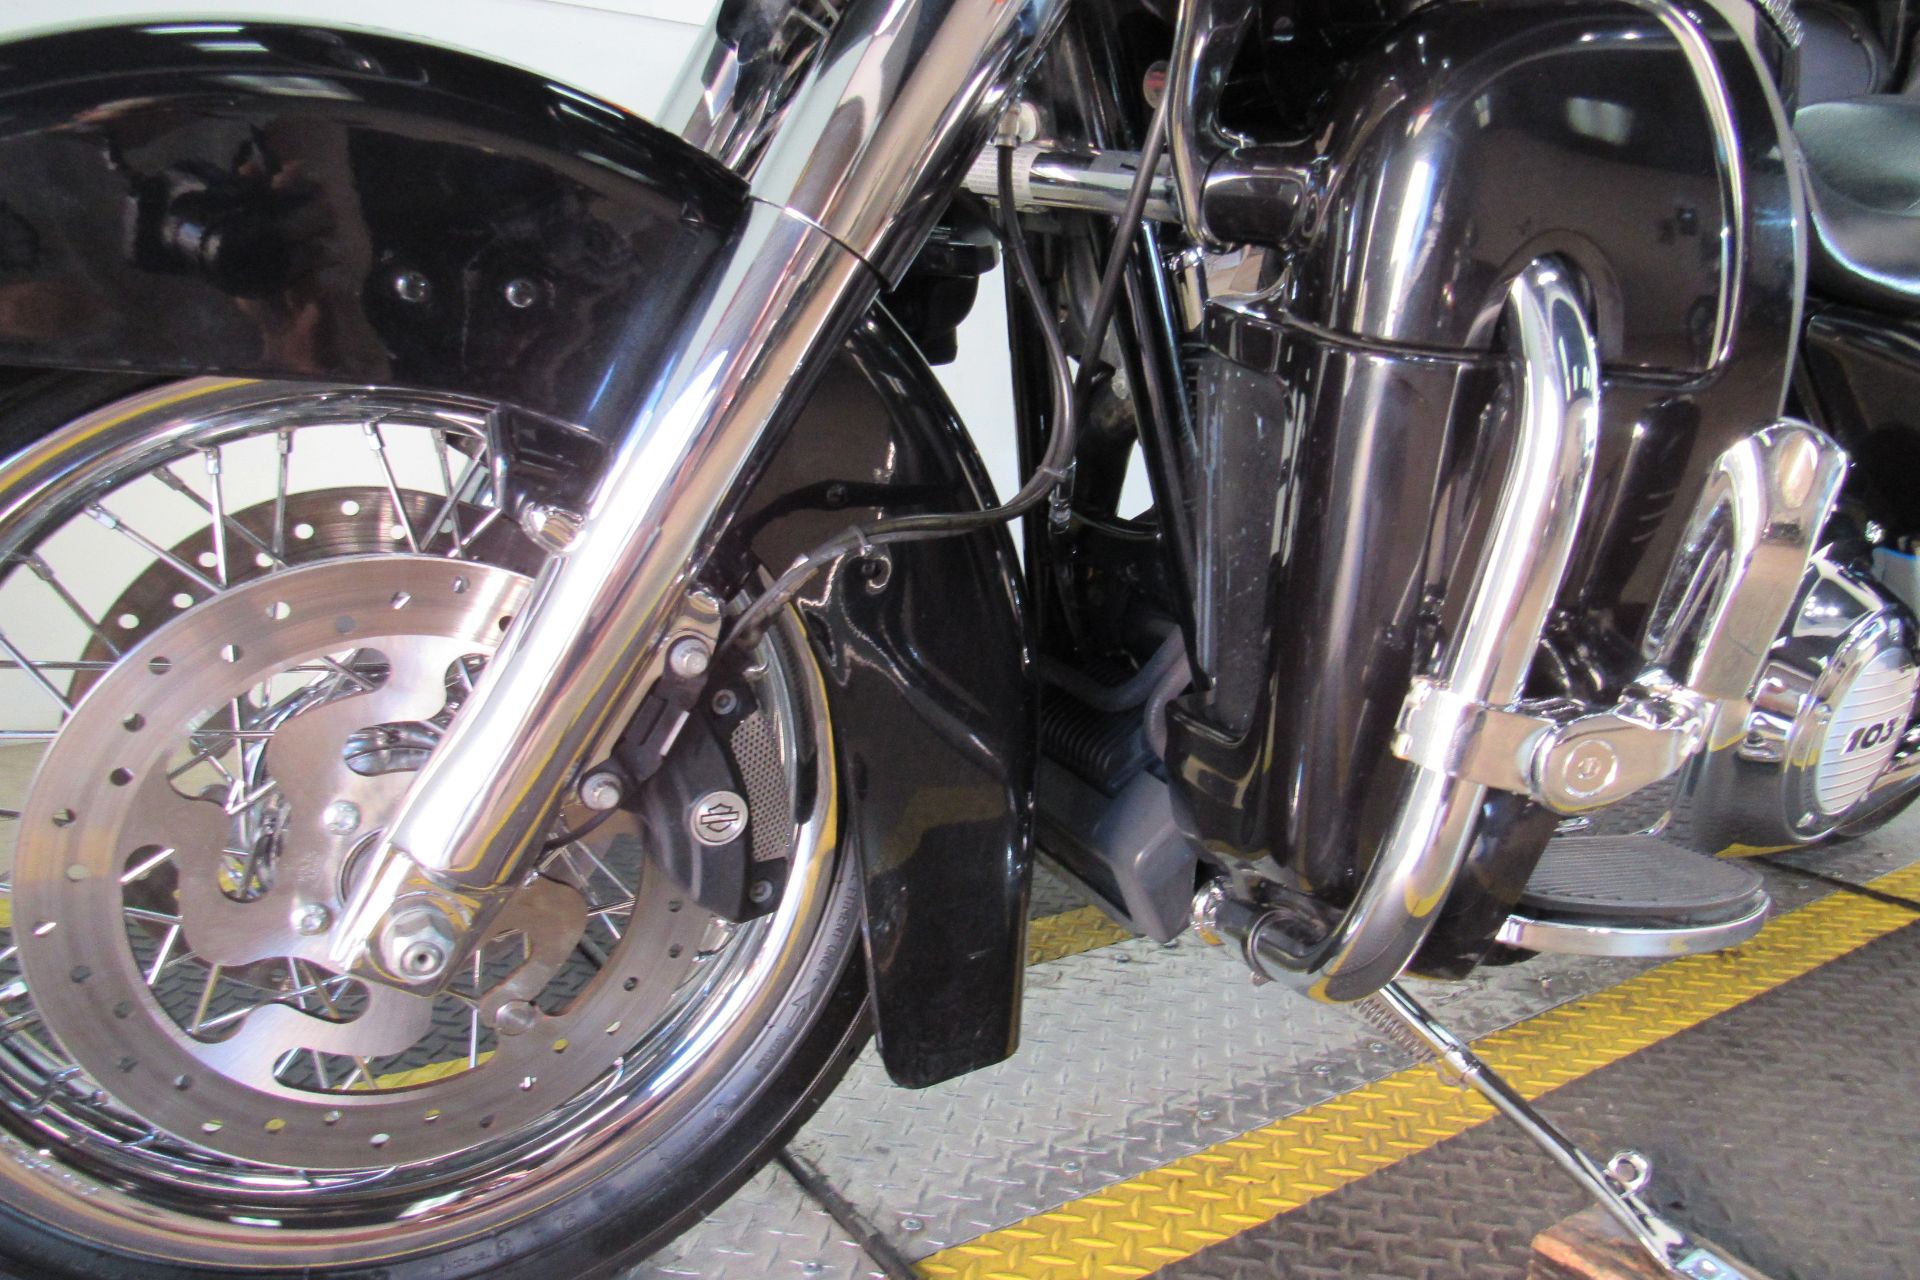 2013 Harley-Davidson Road Glide® Ultra in Temecula, California - Photo 18